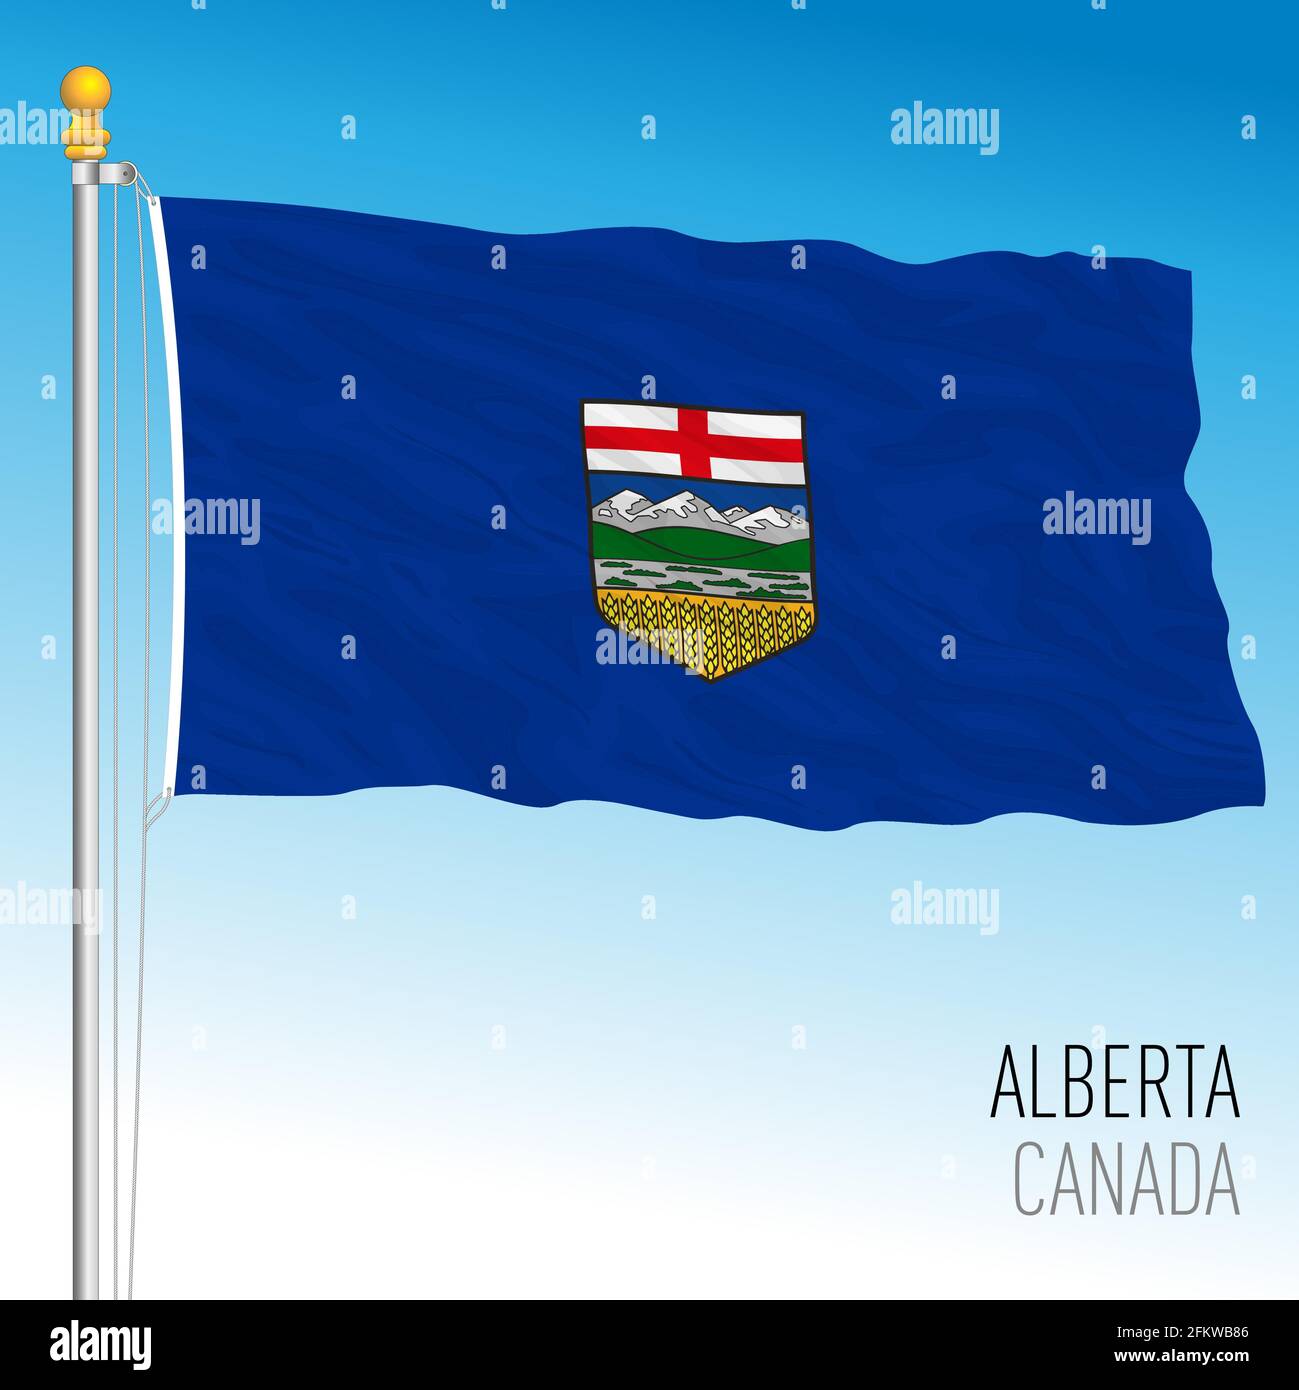 Alberta territorial and regional flag, Canada, north american country, vector illustration Stock Vector